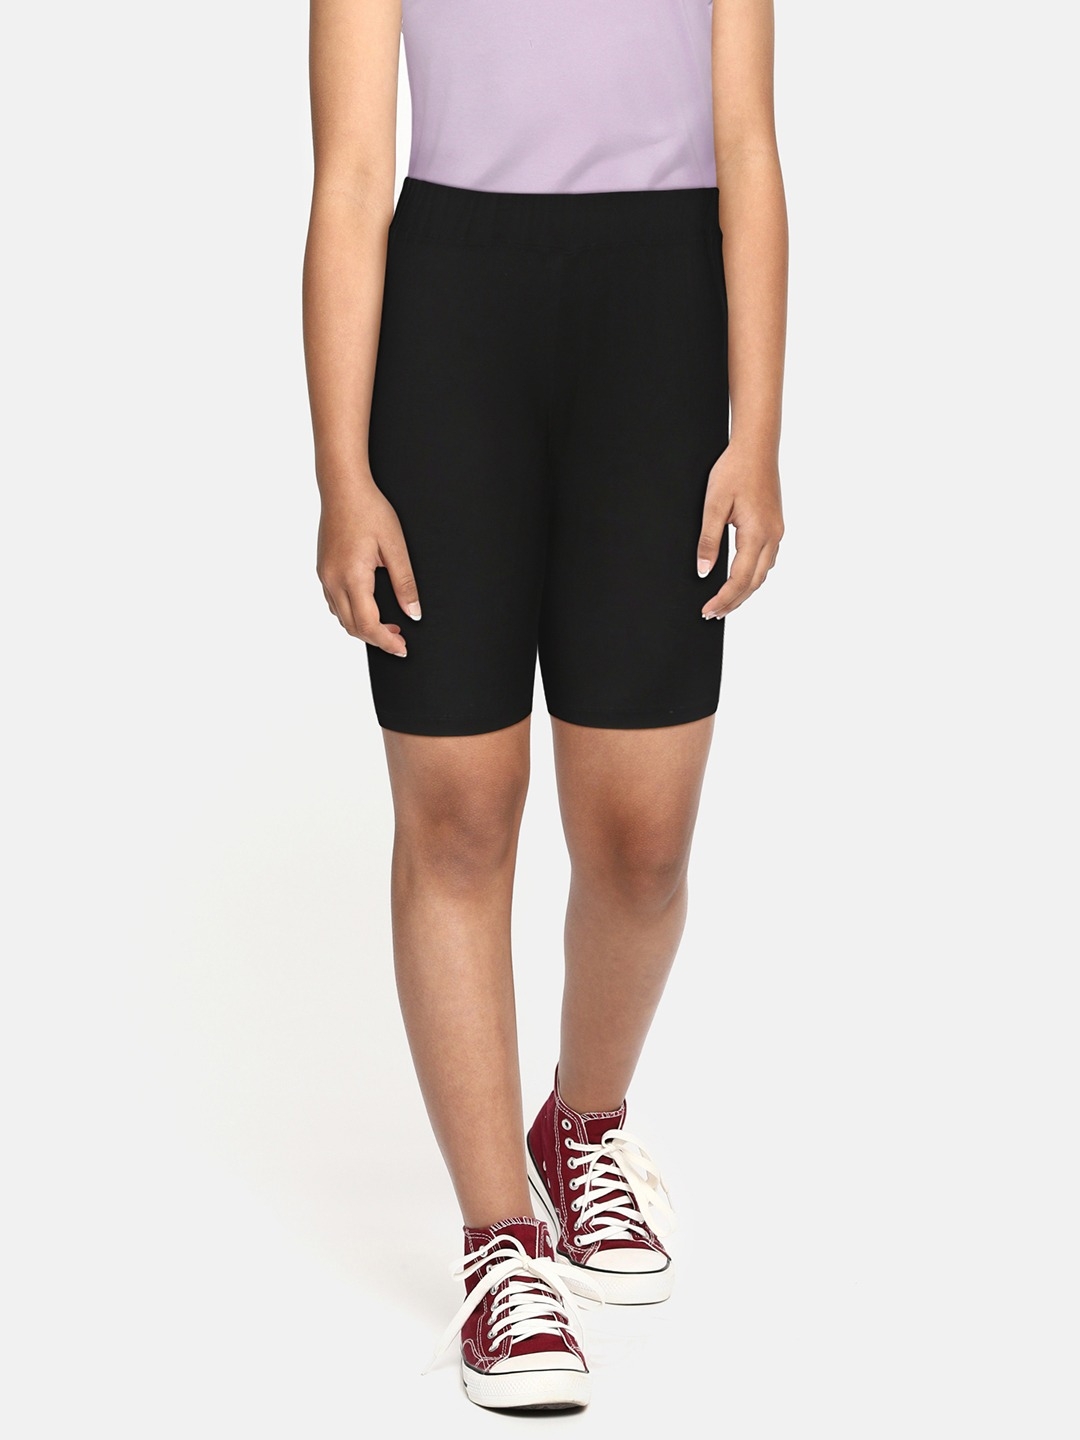 SEYBIL | SEYBIL Girls Pack of 2 Solid Slim Fit Shorts 2